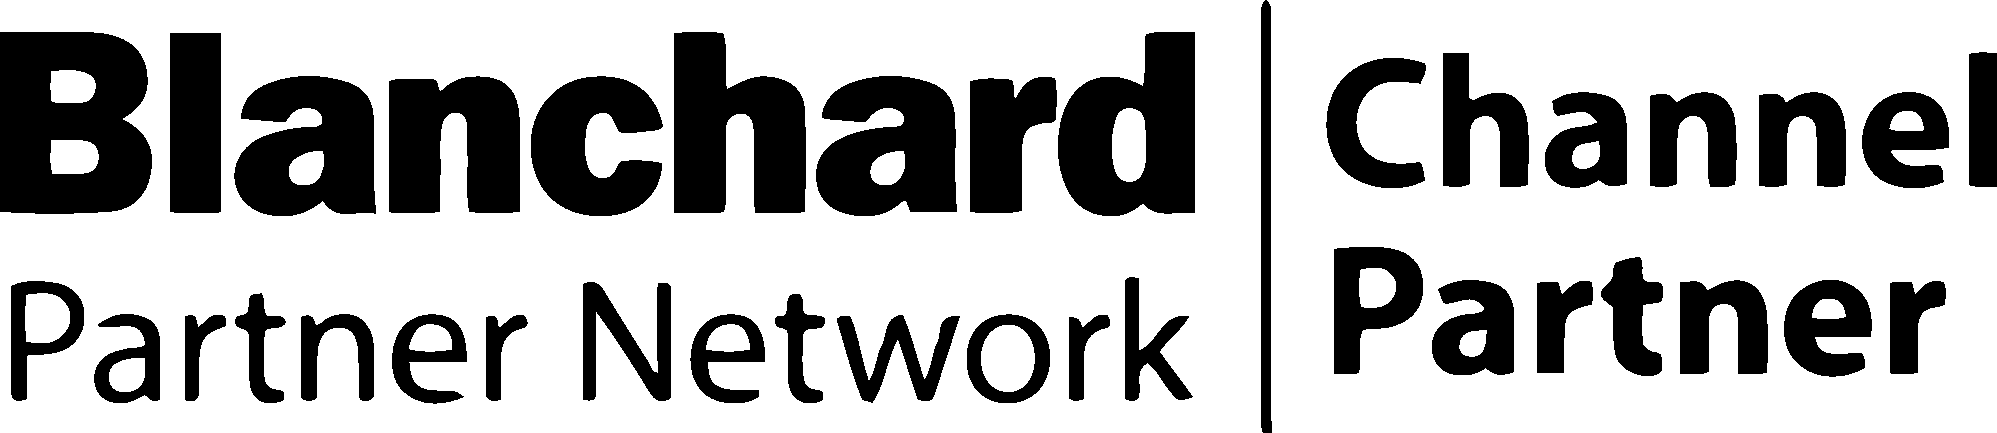 Blanchard Partner Network logo